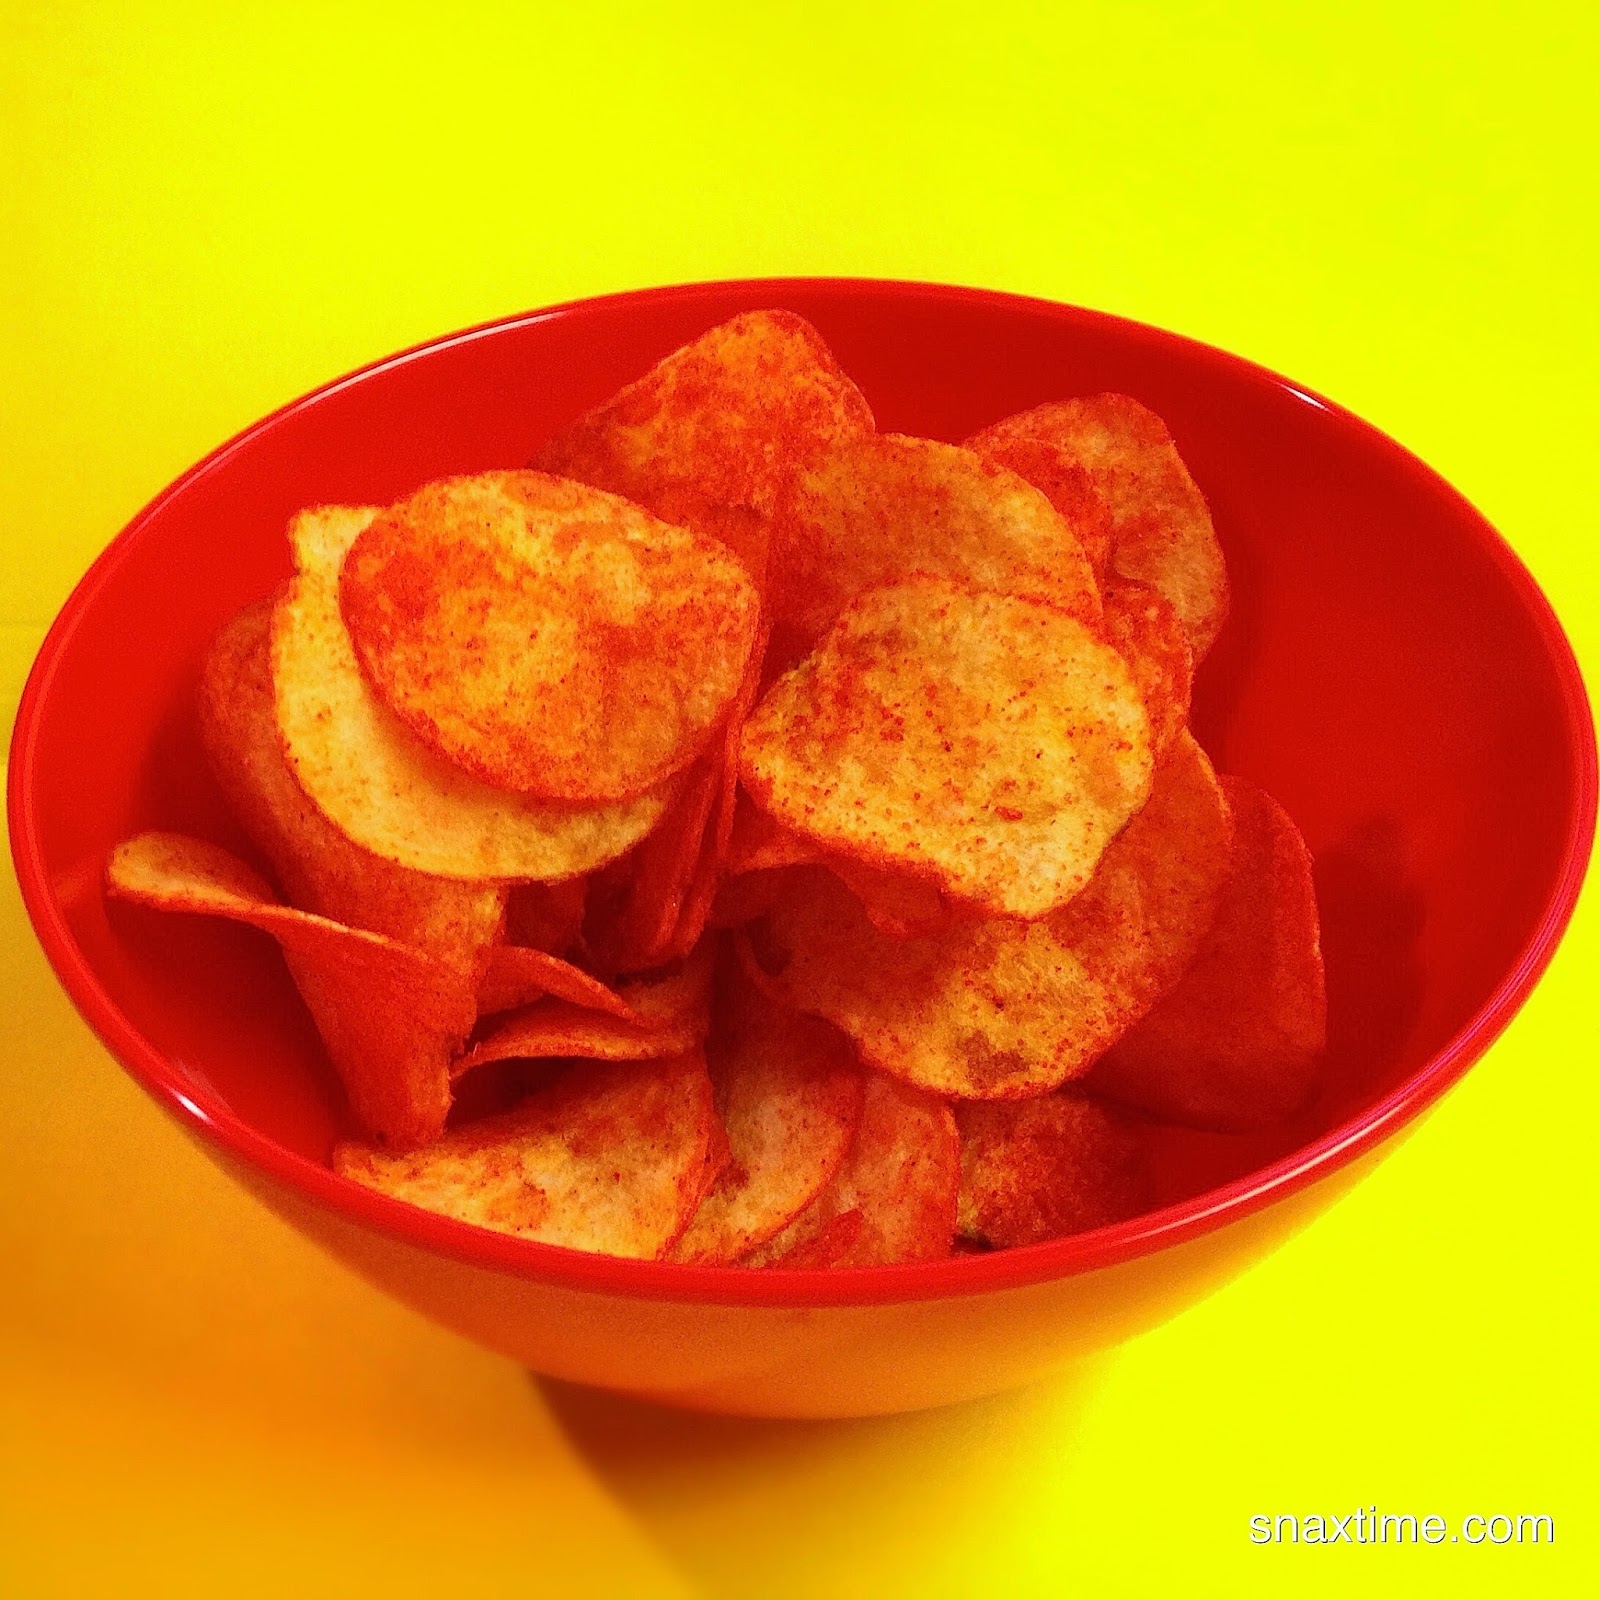 Utz Red Hot Potato Chips – Utz Quality Foods